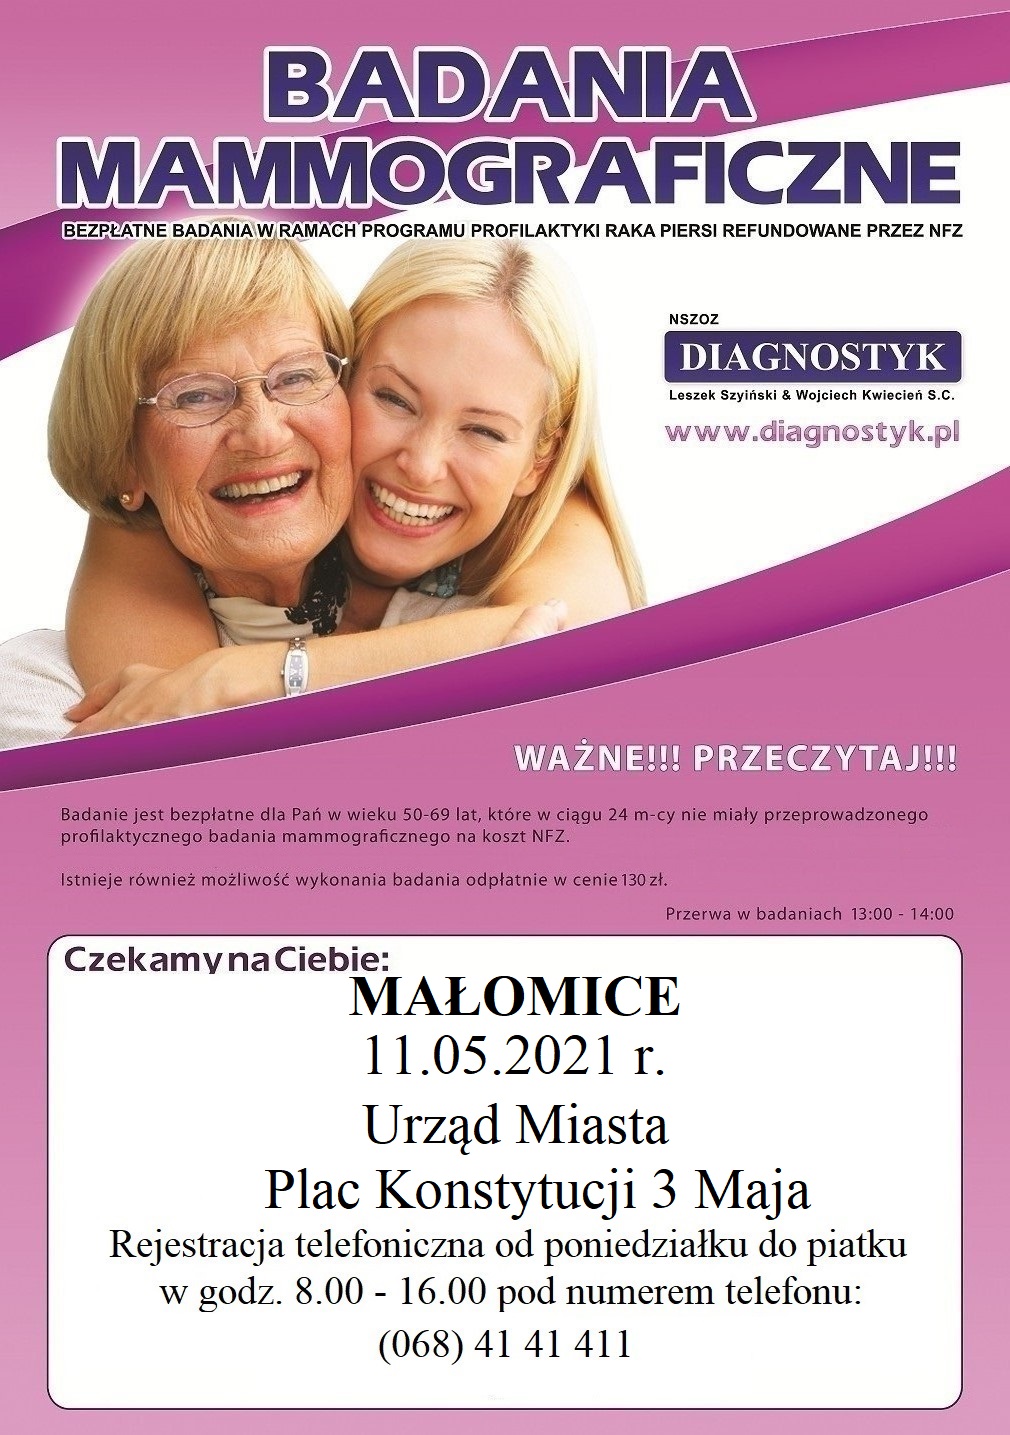 Mammografia Małomice